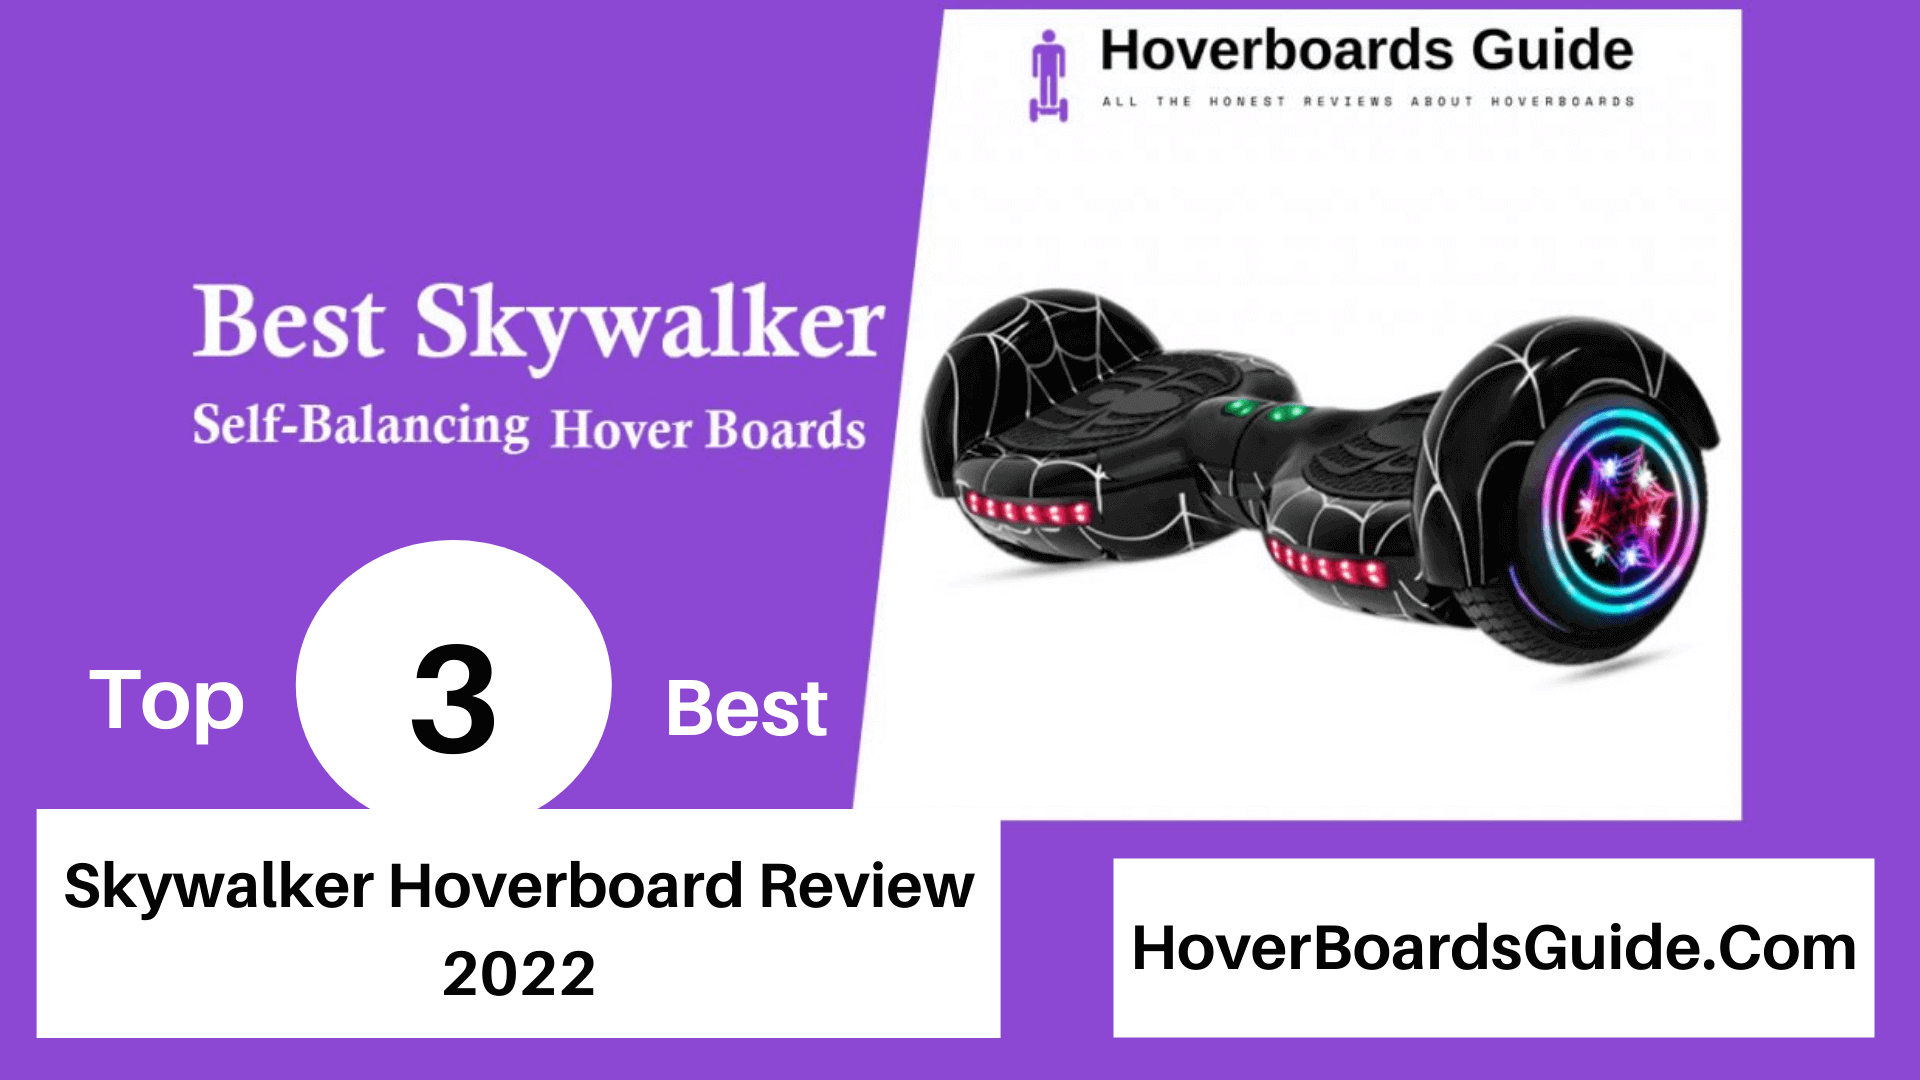 Top 3 Best Skywalker Hoverboard Review 2022